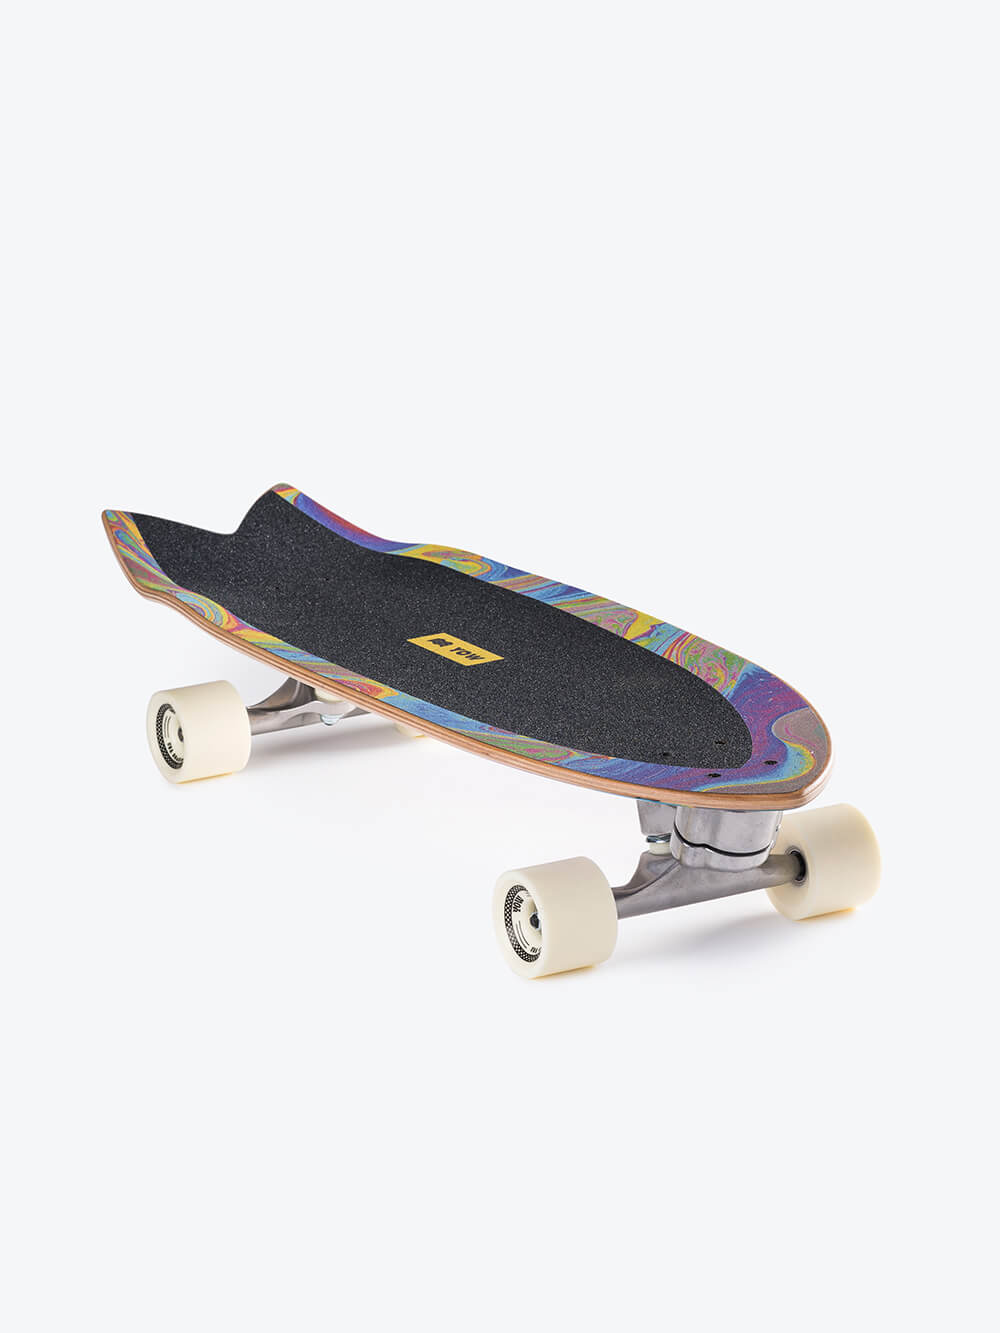 ☆yow coxos 31 surf skate スケートボード☆-